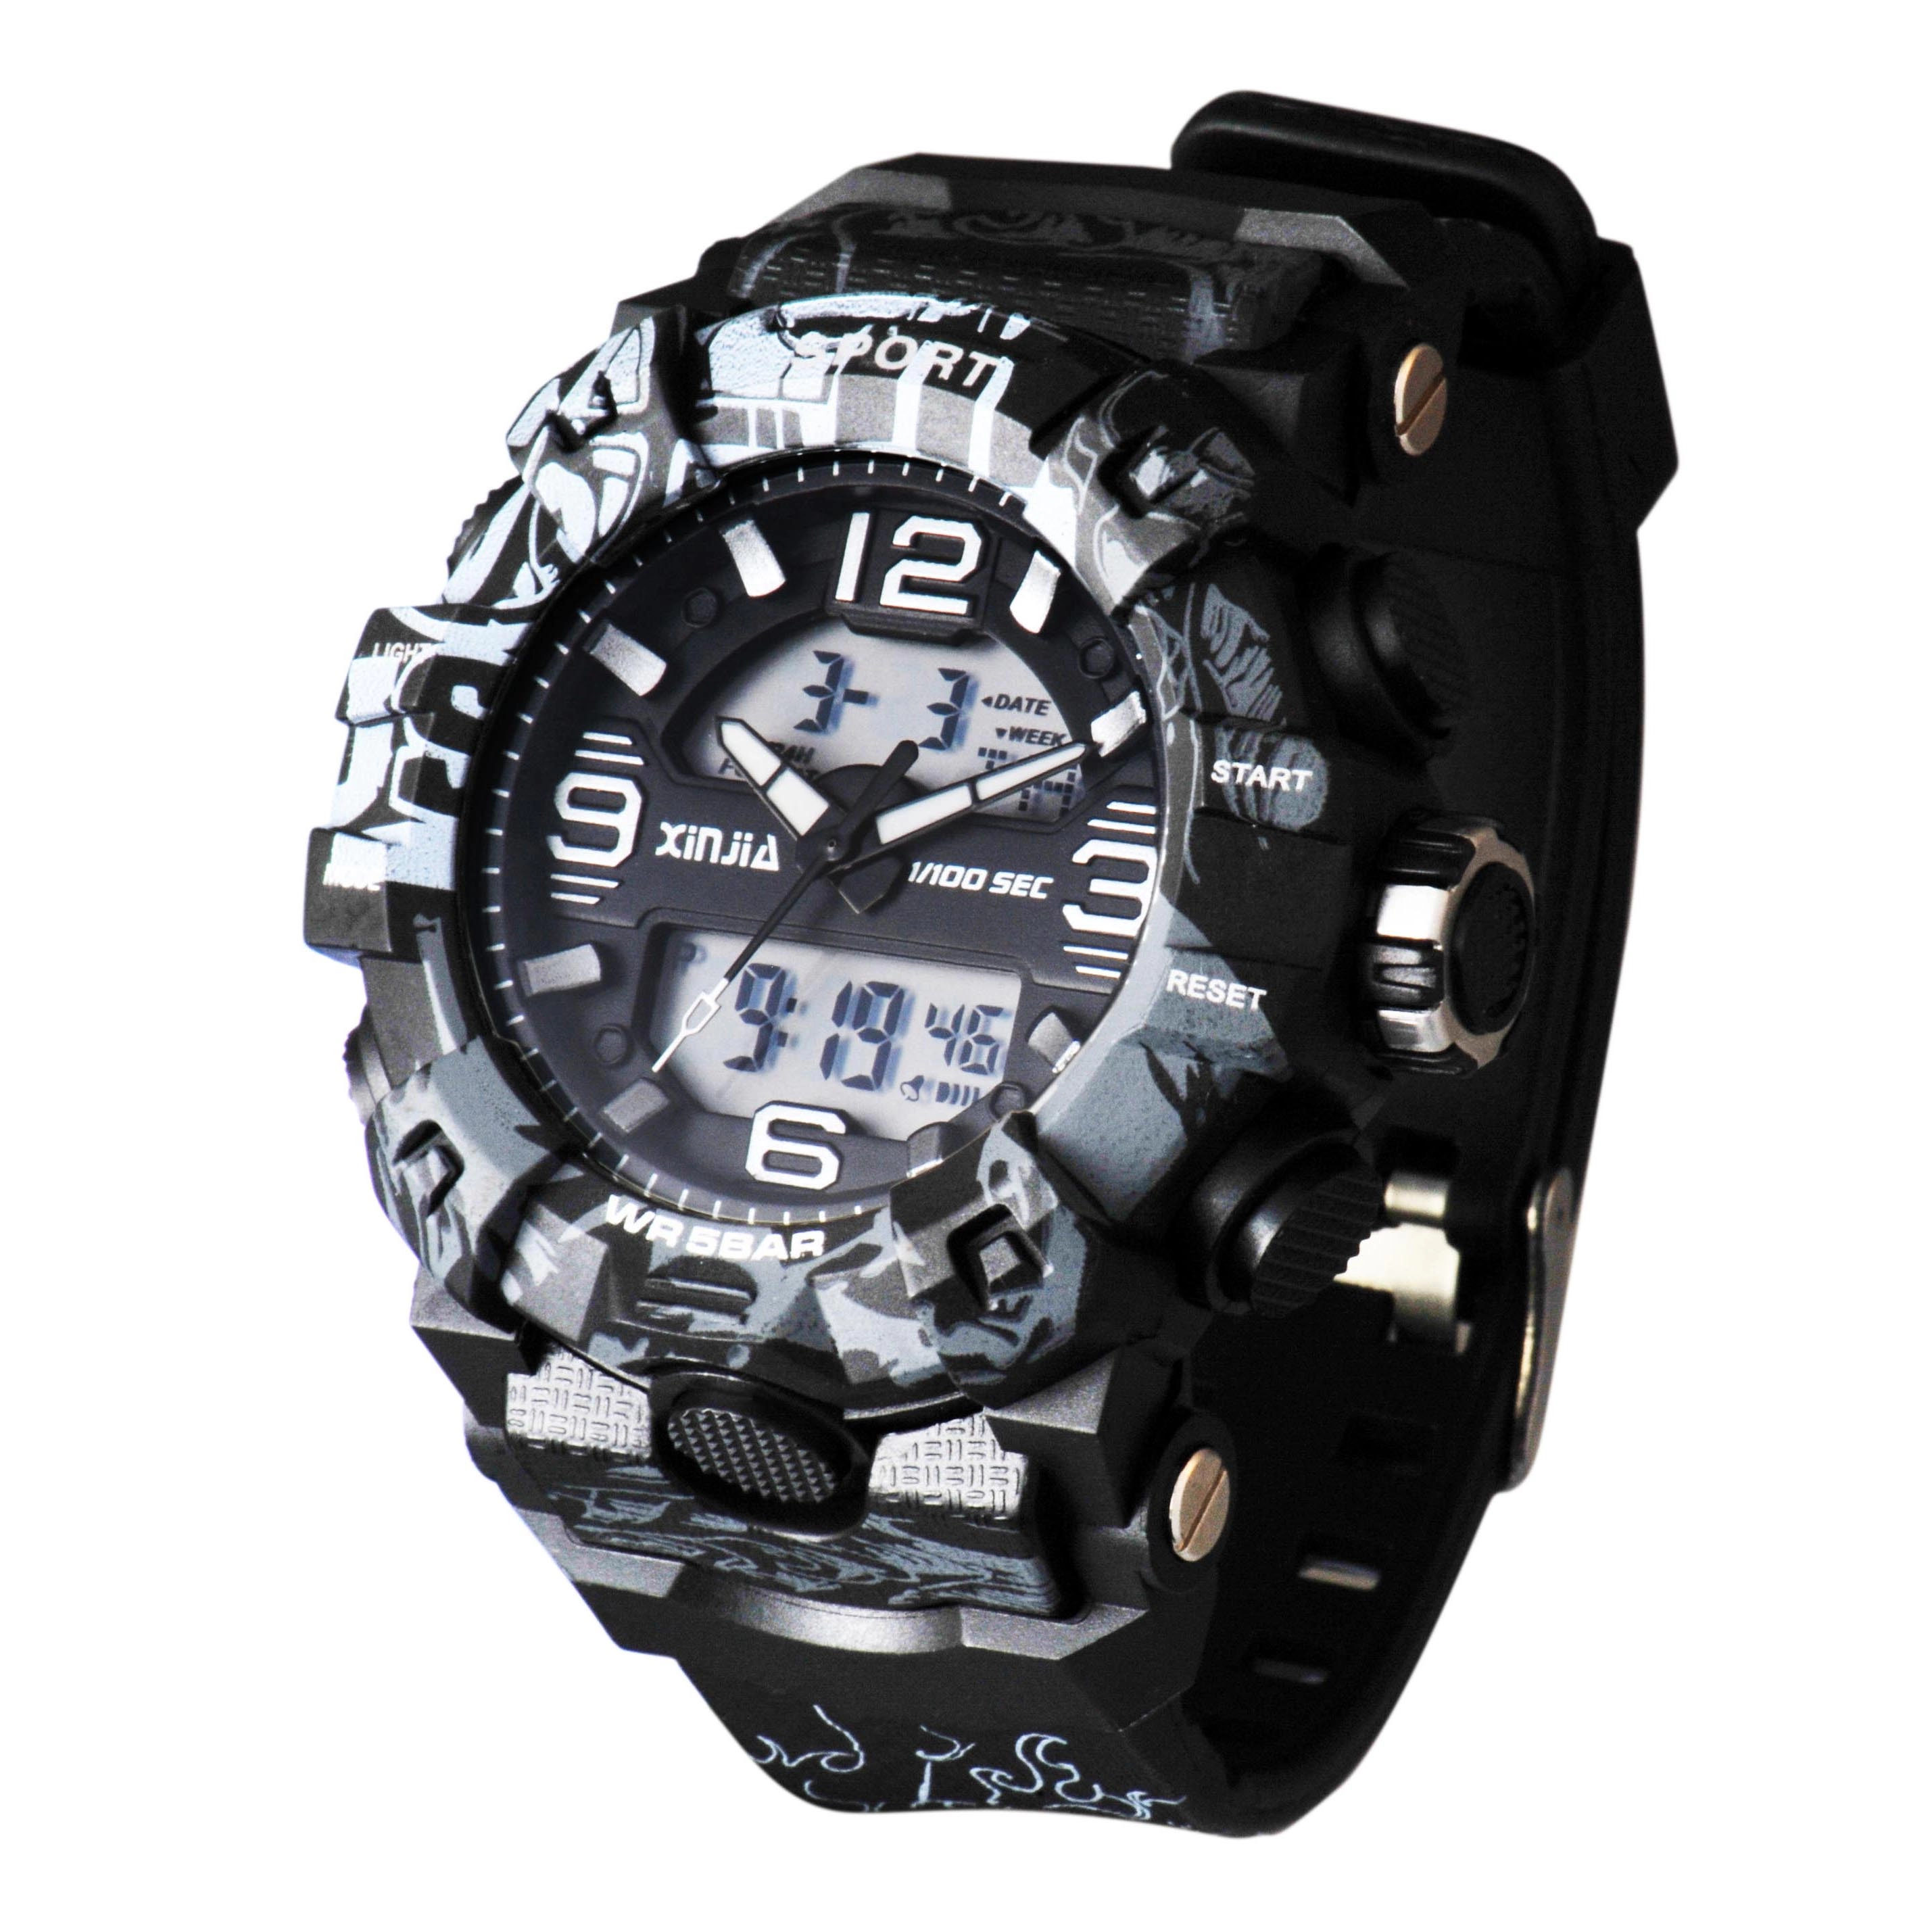 Waterproof Analog-Digital Camouflage Wrist Watch In Promotion